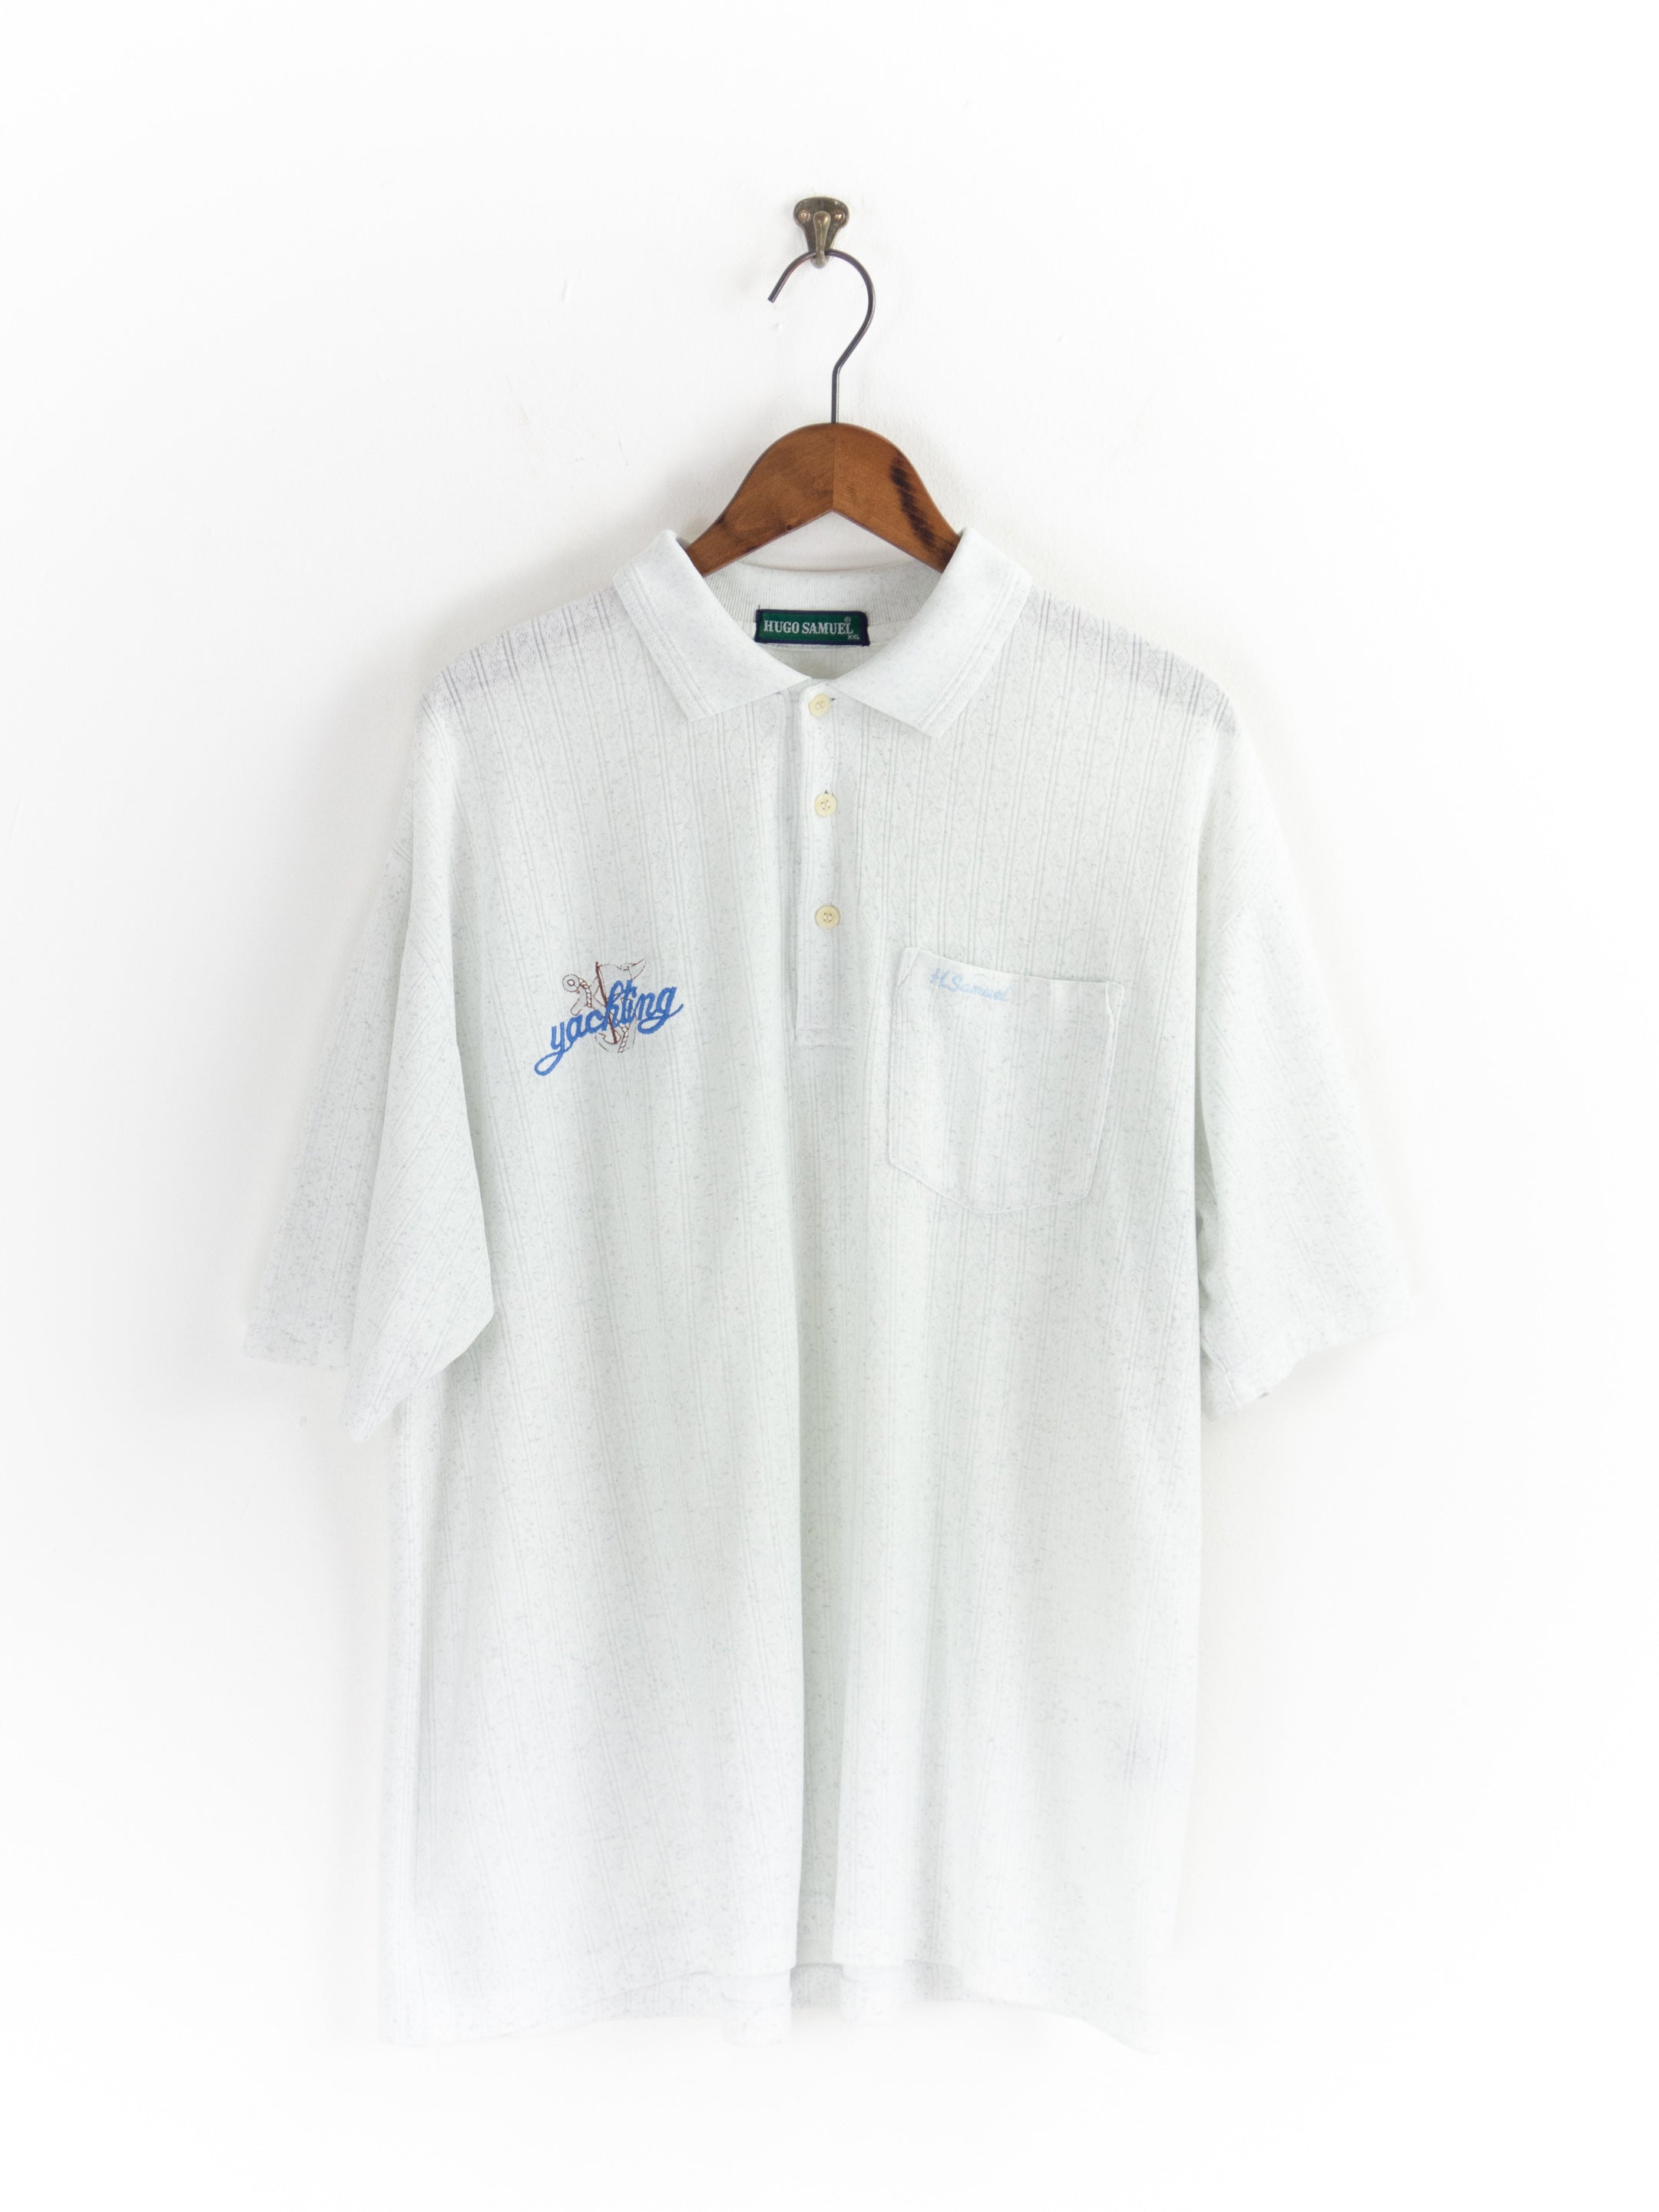 Vintage Polo T-Shirt XL/XXL